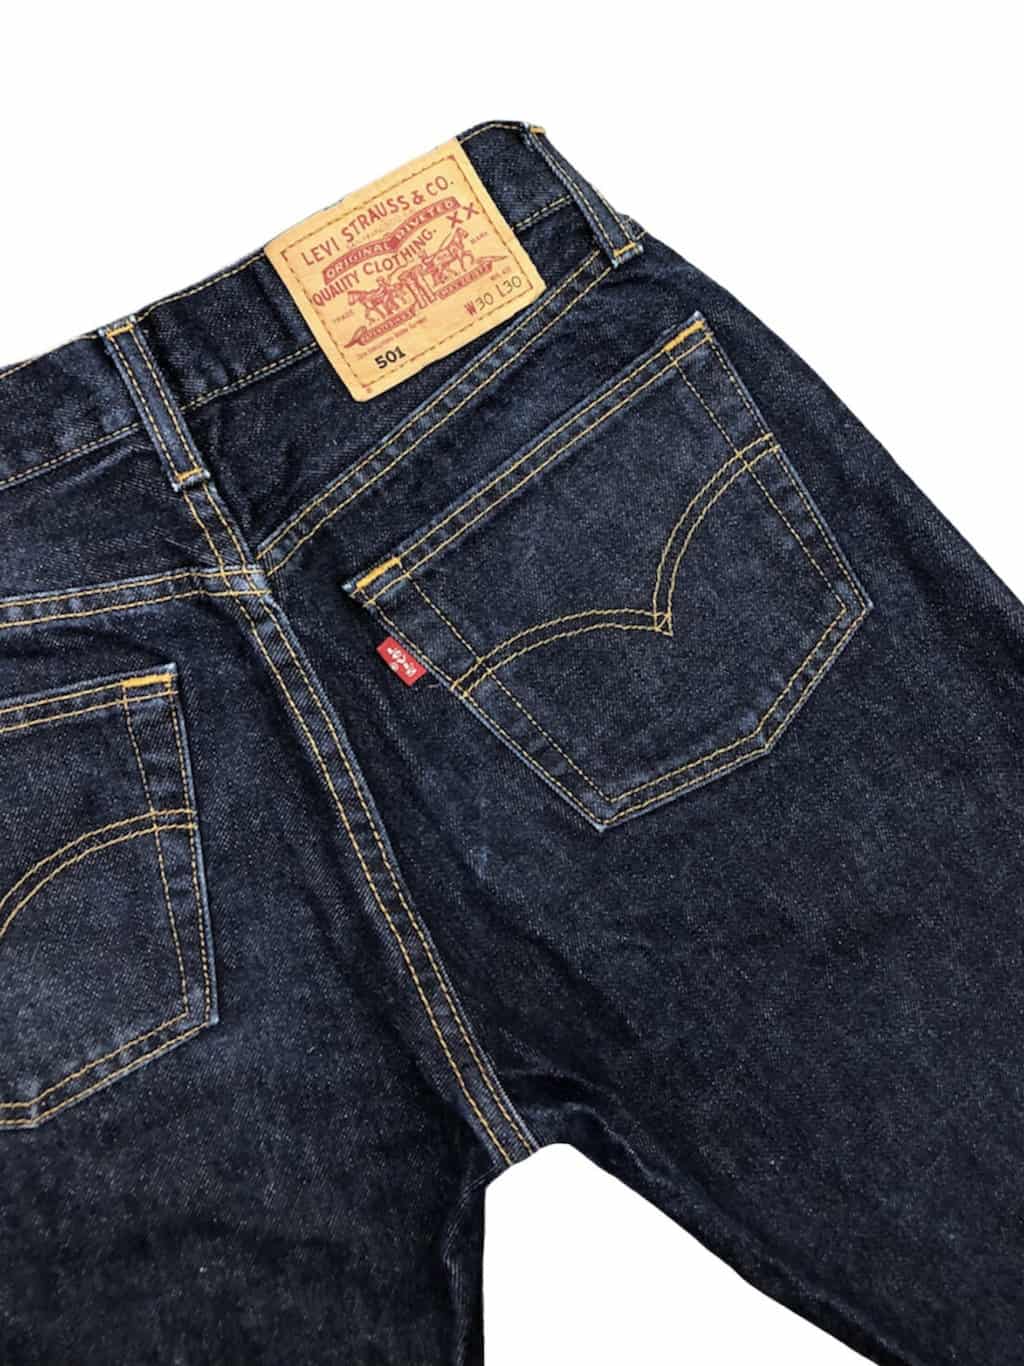 00s vintage dark blue levis 501s denim Jeans - W28 x L29 - St Cyr Vintage